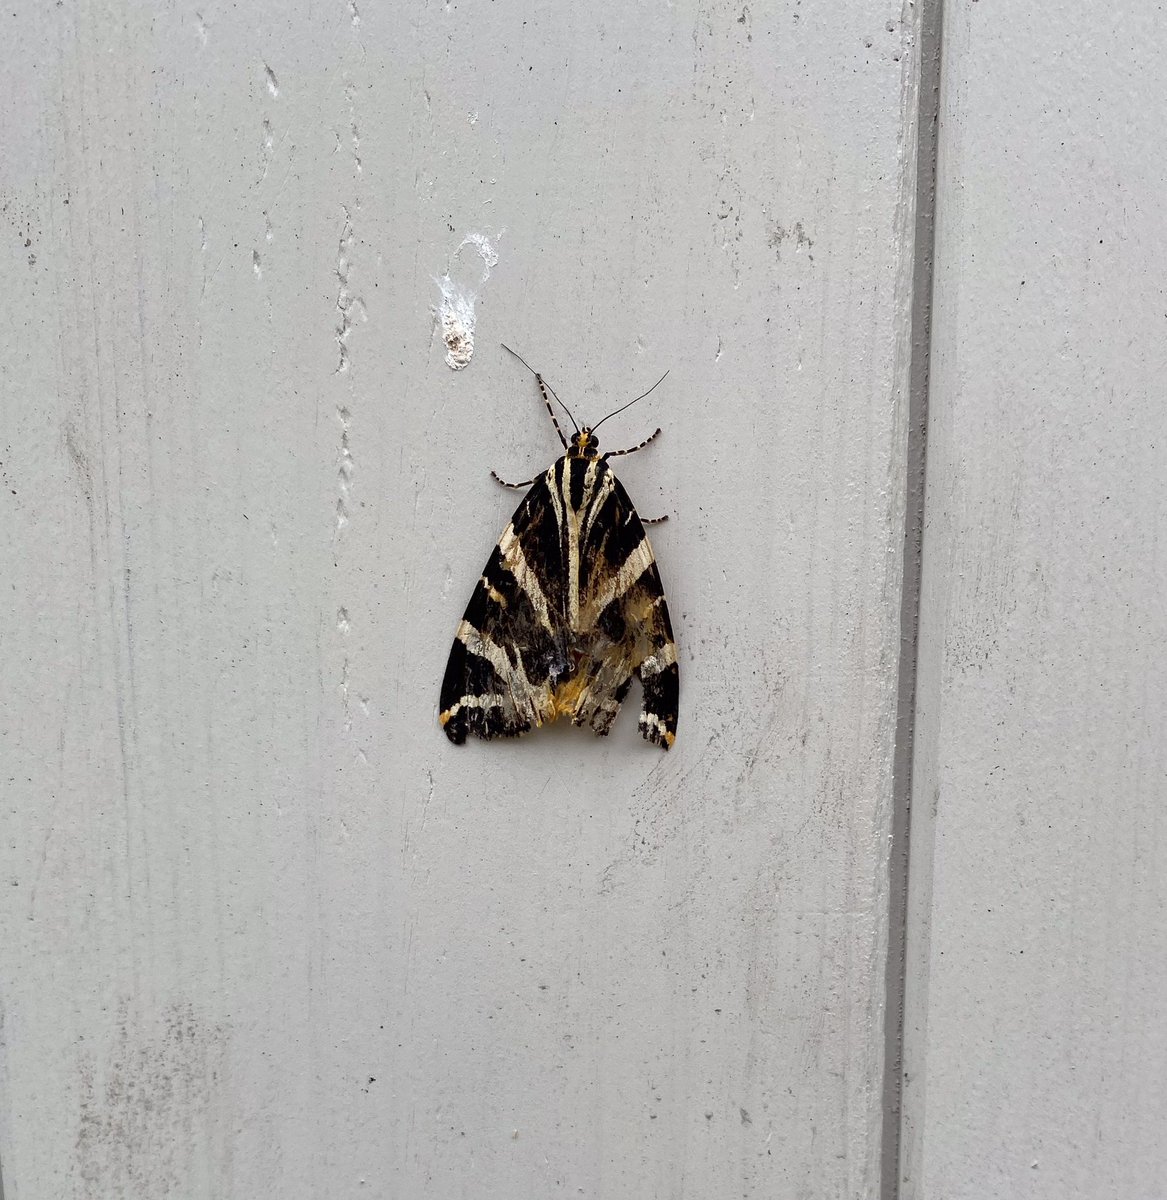 @MatthewPaulPoet 
Remembering Ted Walker, moth on a shed door, looking, dare I say it, slightly moth-eaten.